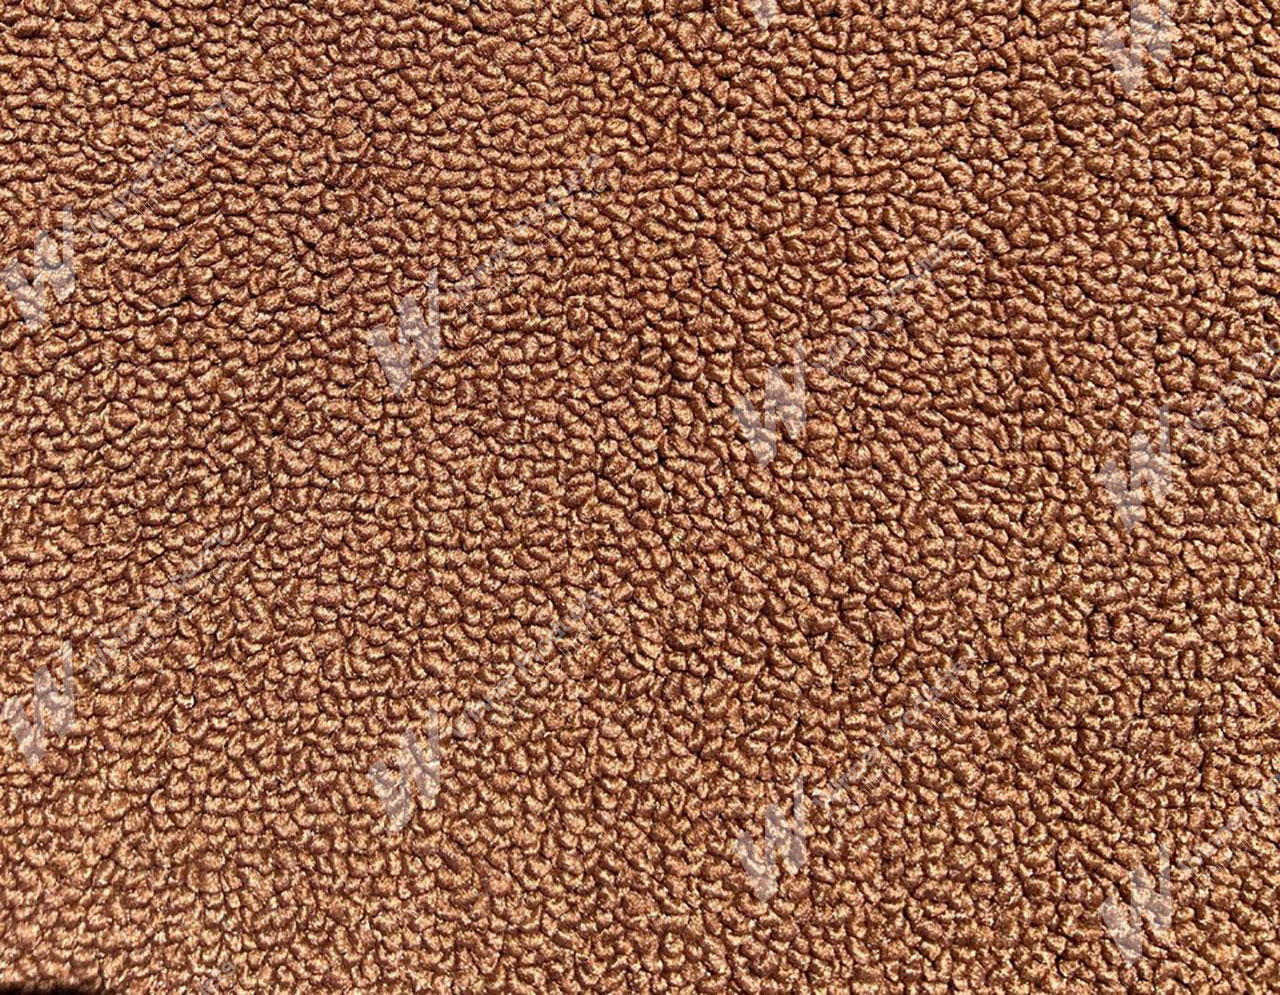 Holden Kingswood HX Kingswood Panel Van 67Y Tan & Cloth Carpet (Image 1 of 1)